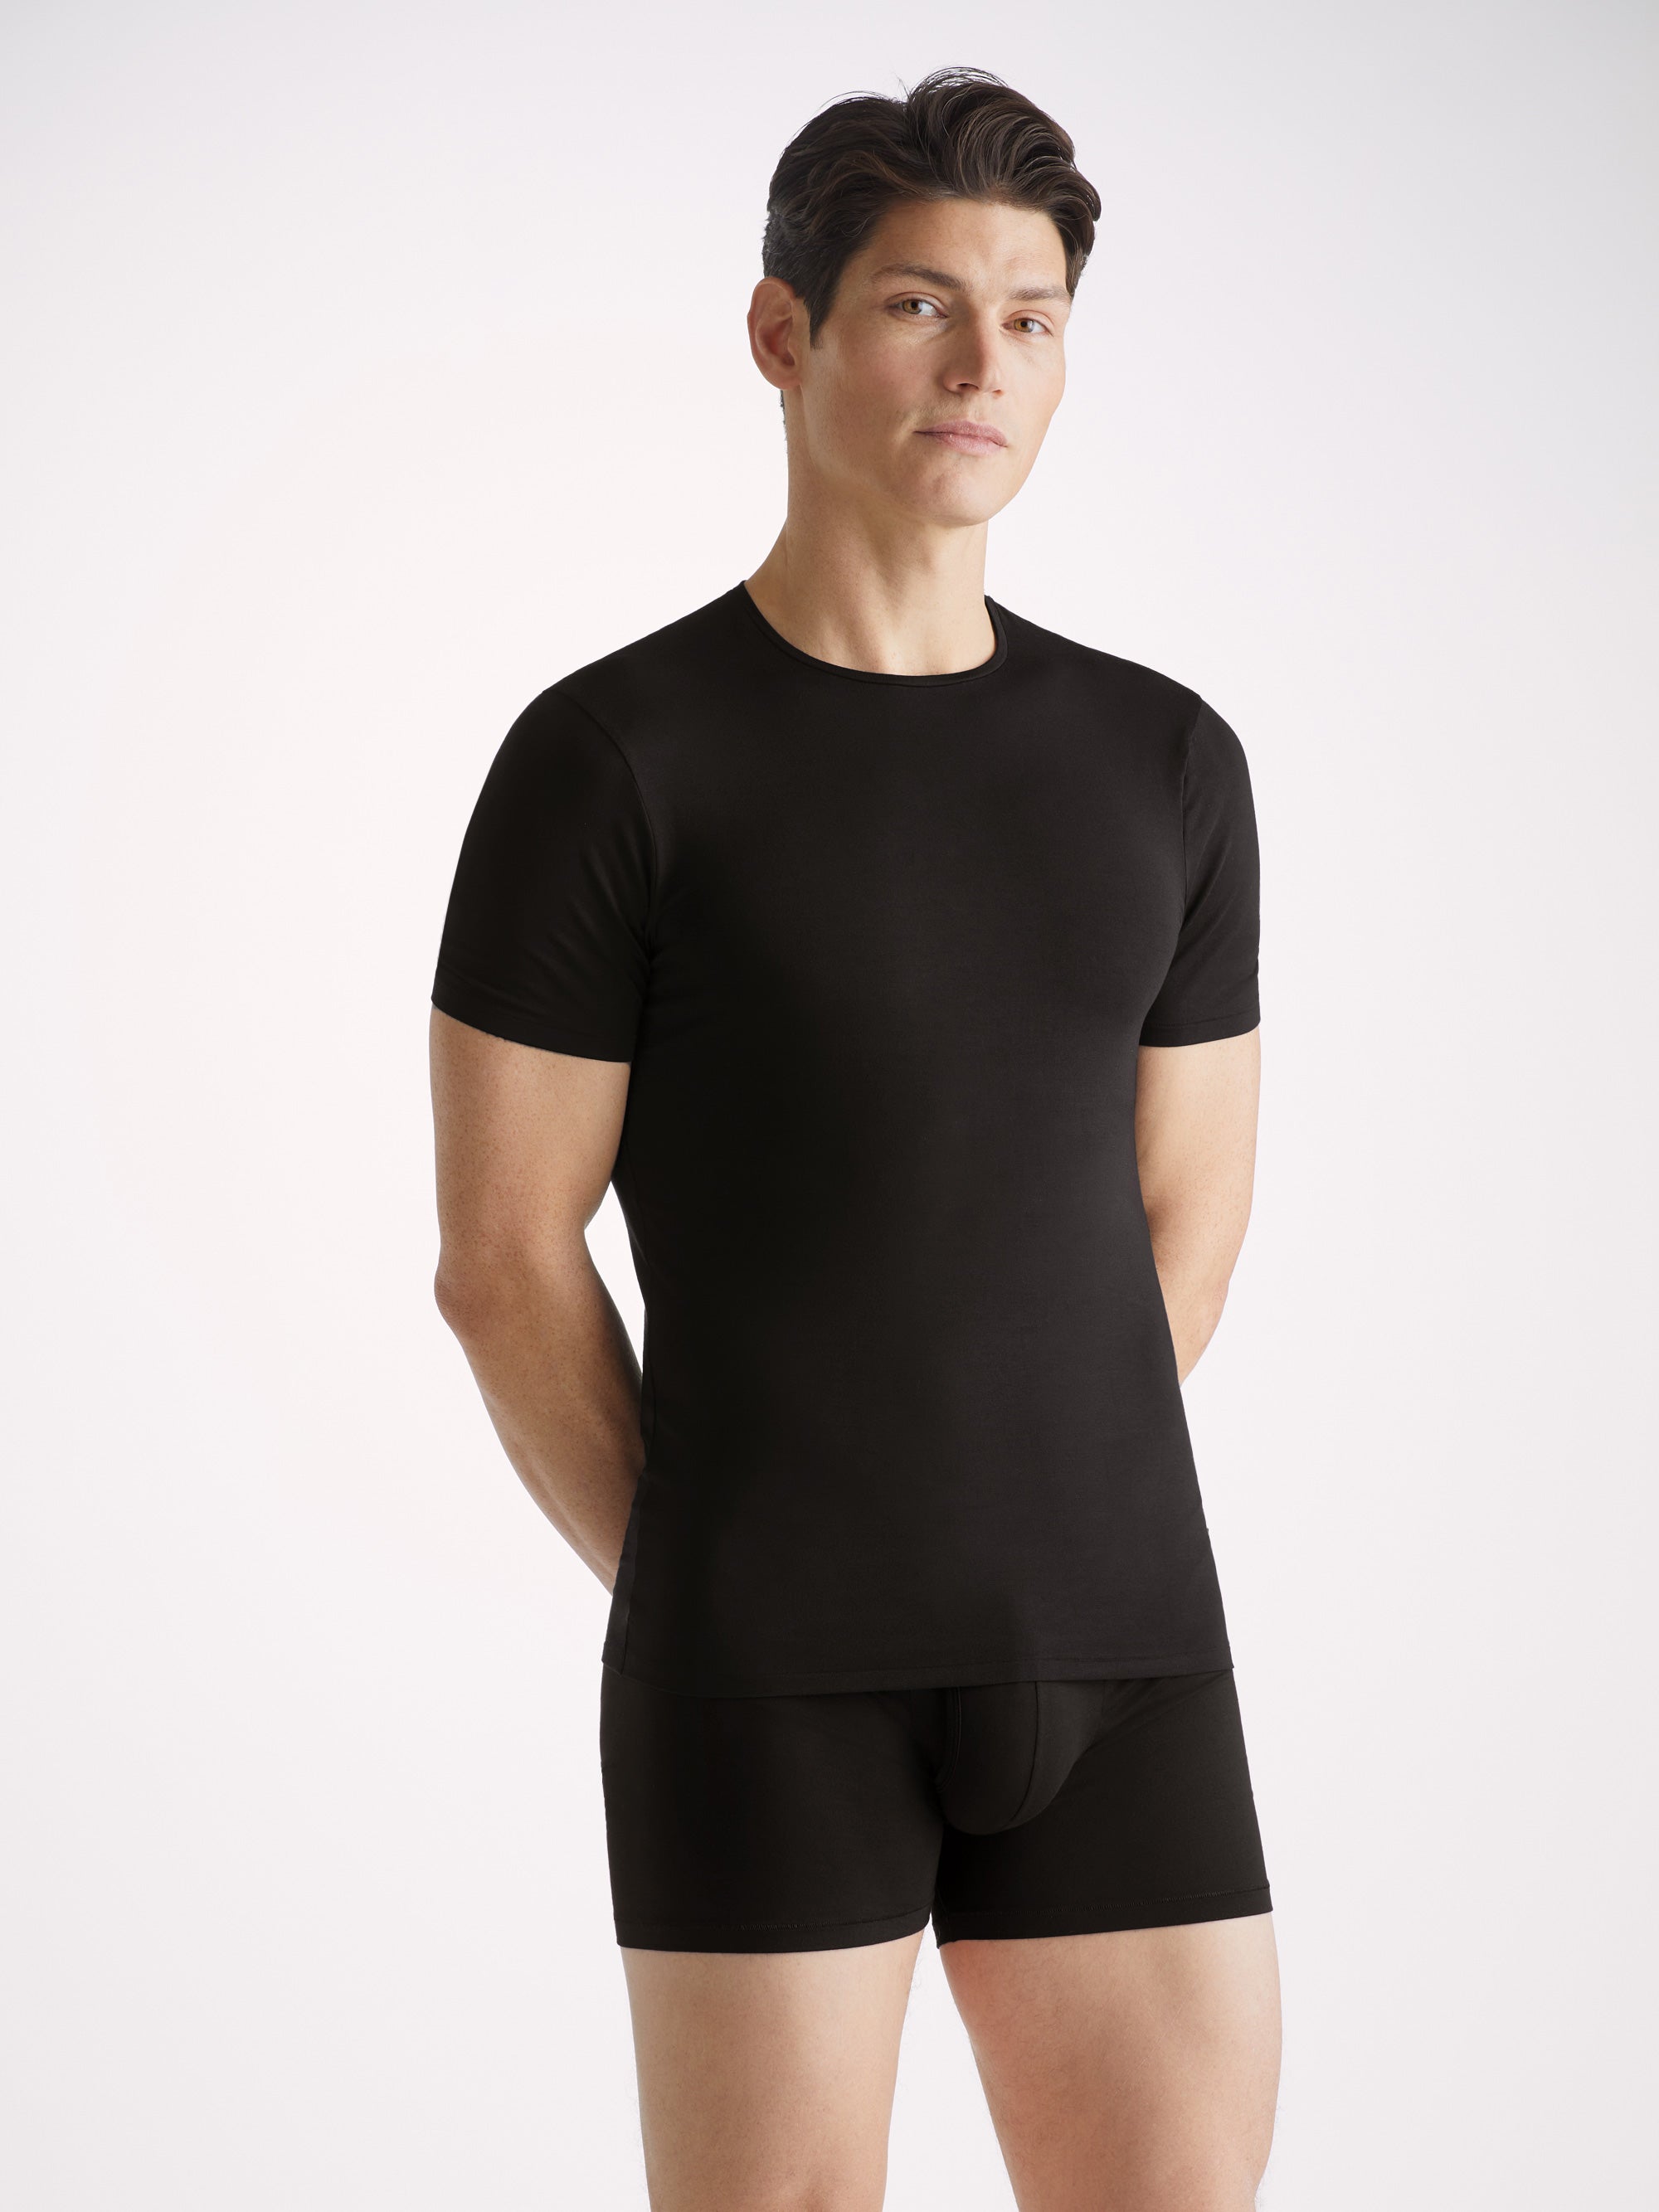 Men's Underwear T-Shirt Alex Micro Modal Black